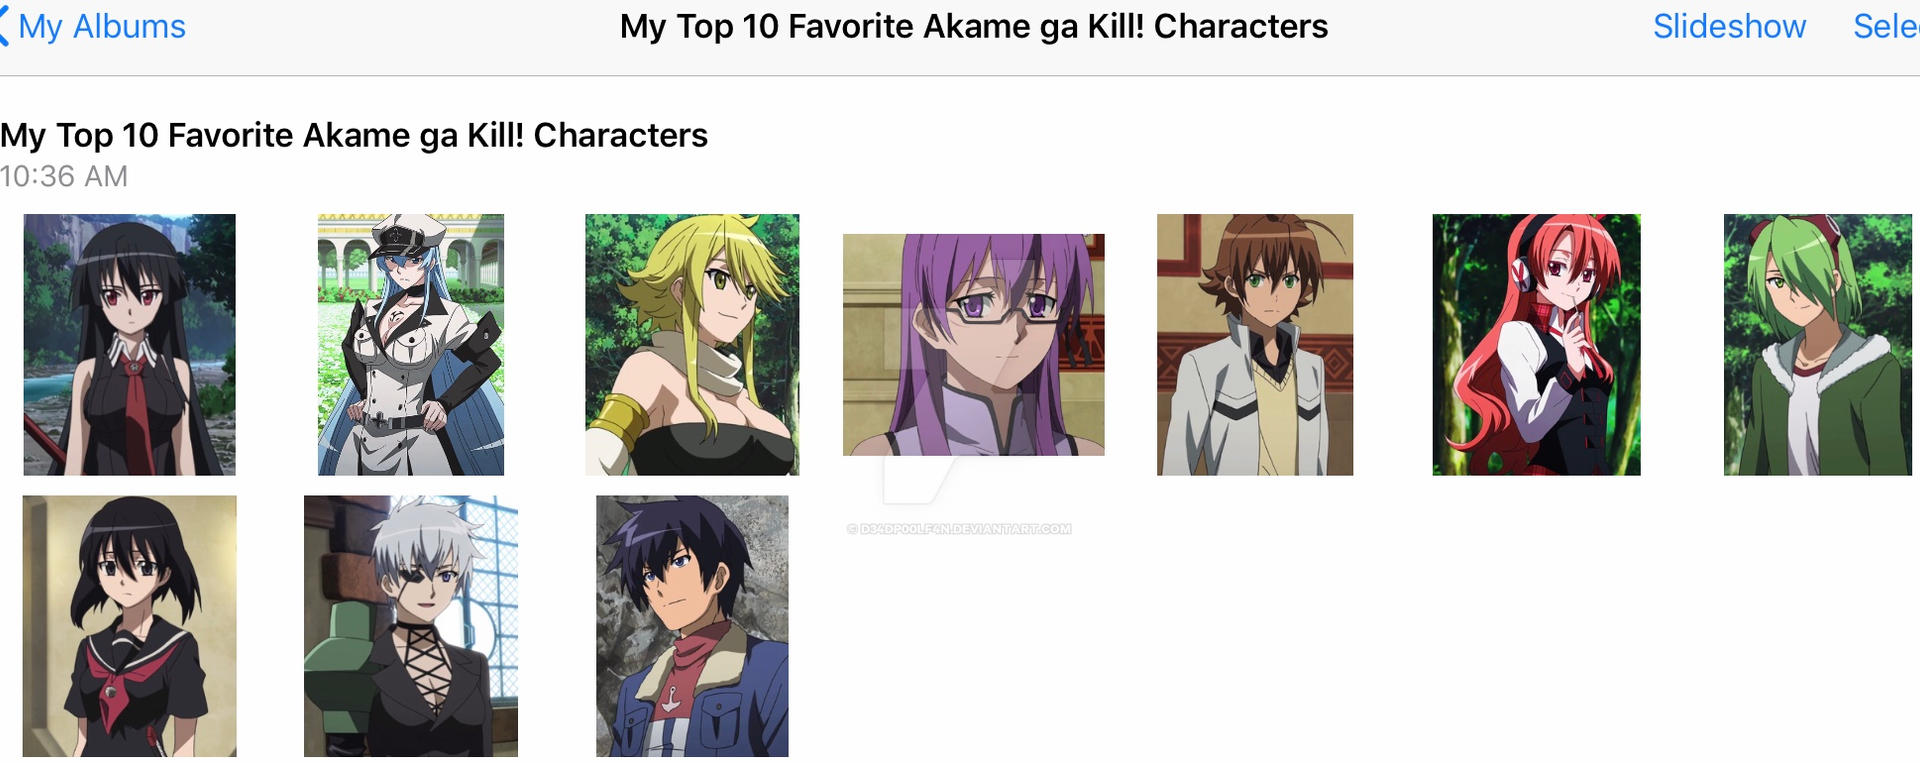 Tatsumi (Akame Ga Kill!) - Incredible Characters Wiki